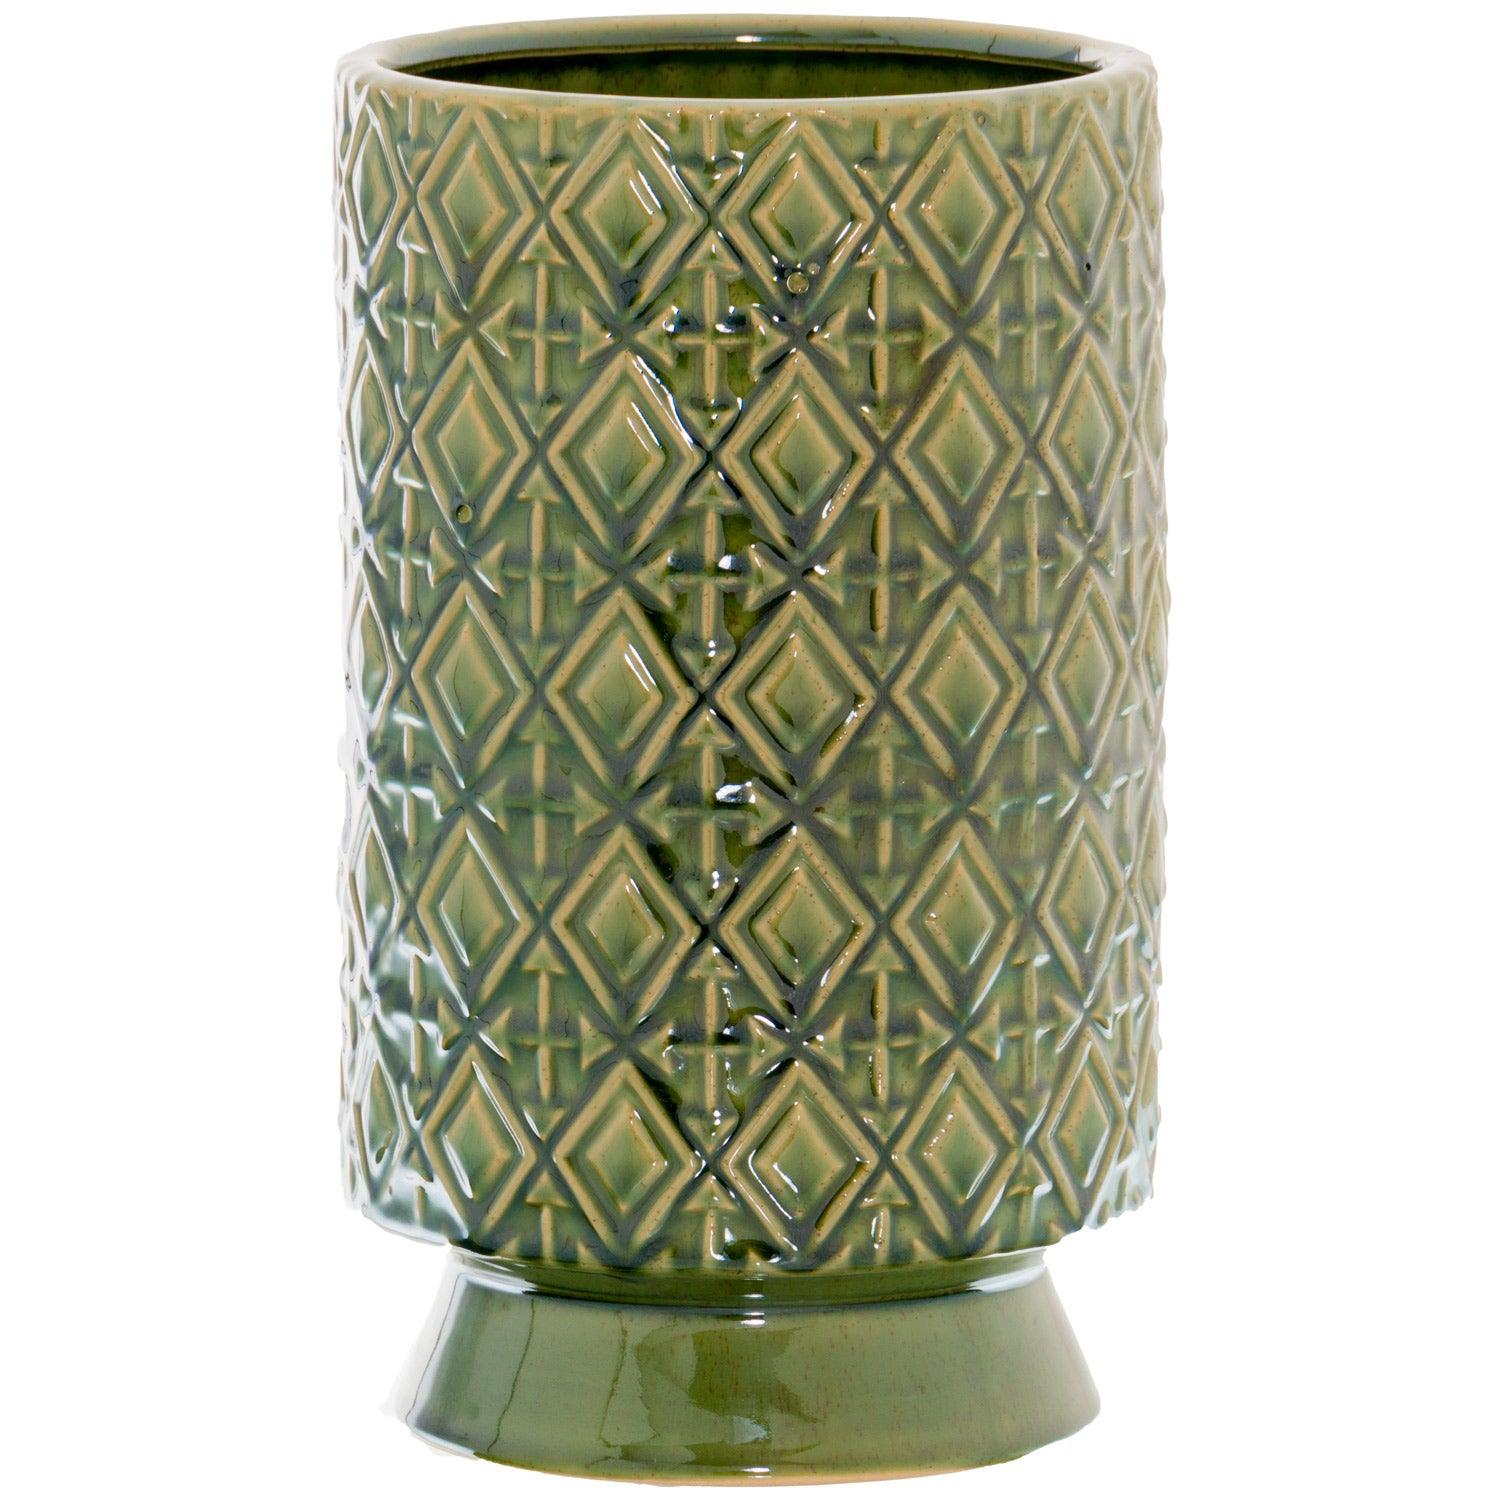 View Seville Collection Olive Paragon Vase information